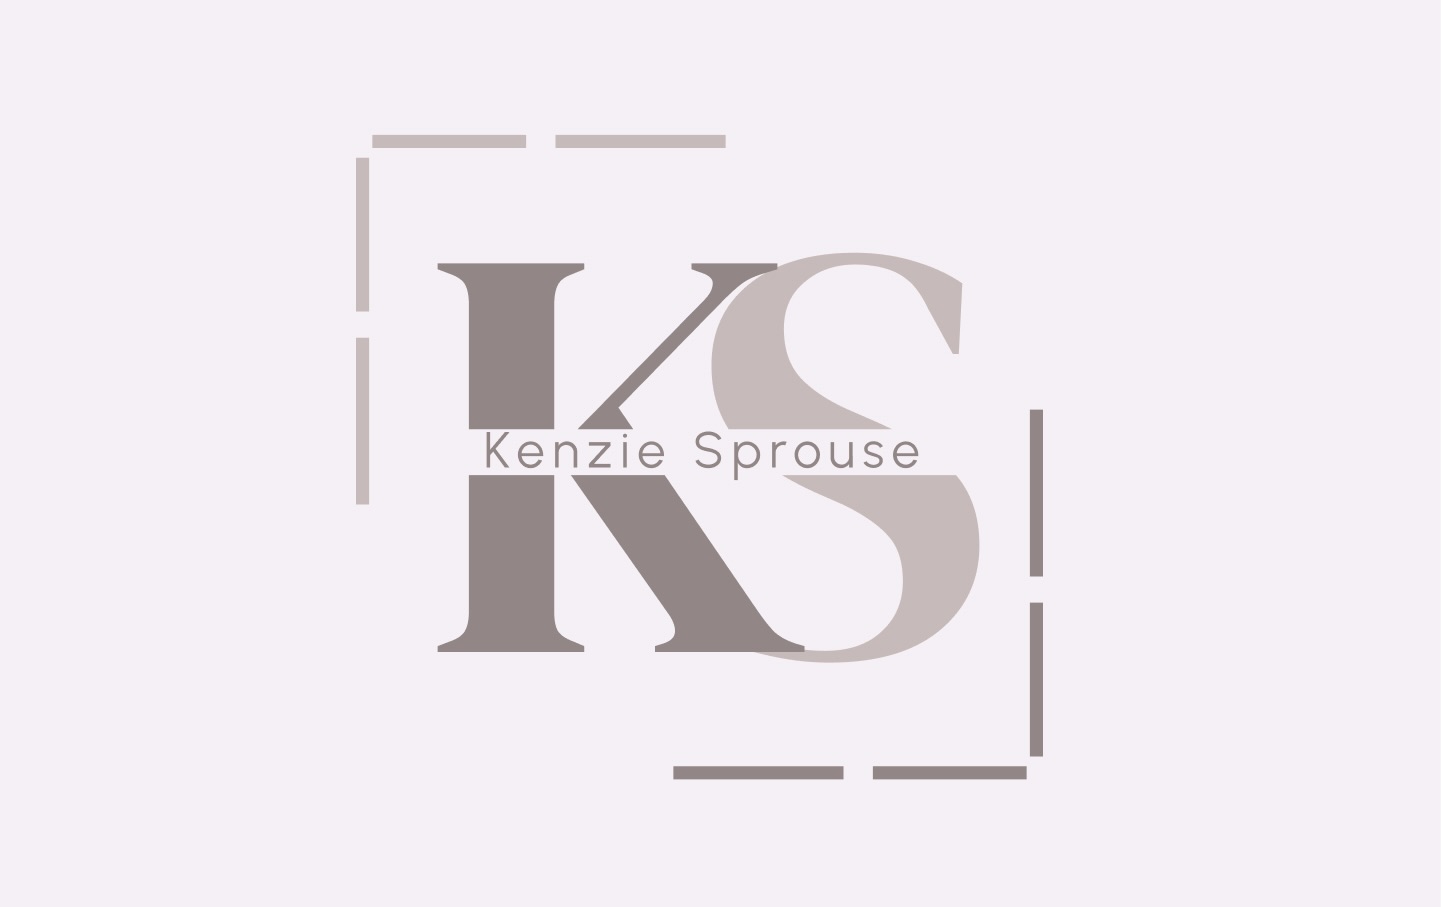 Kenzie Sprouse logo for portfolio